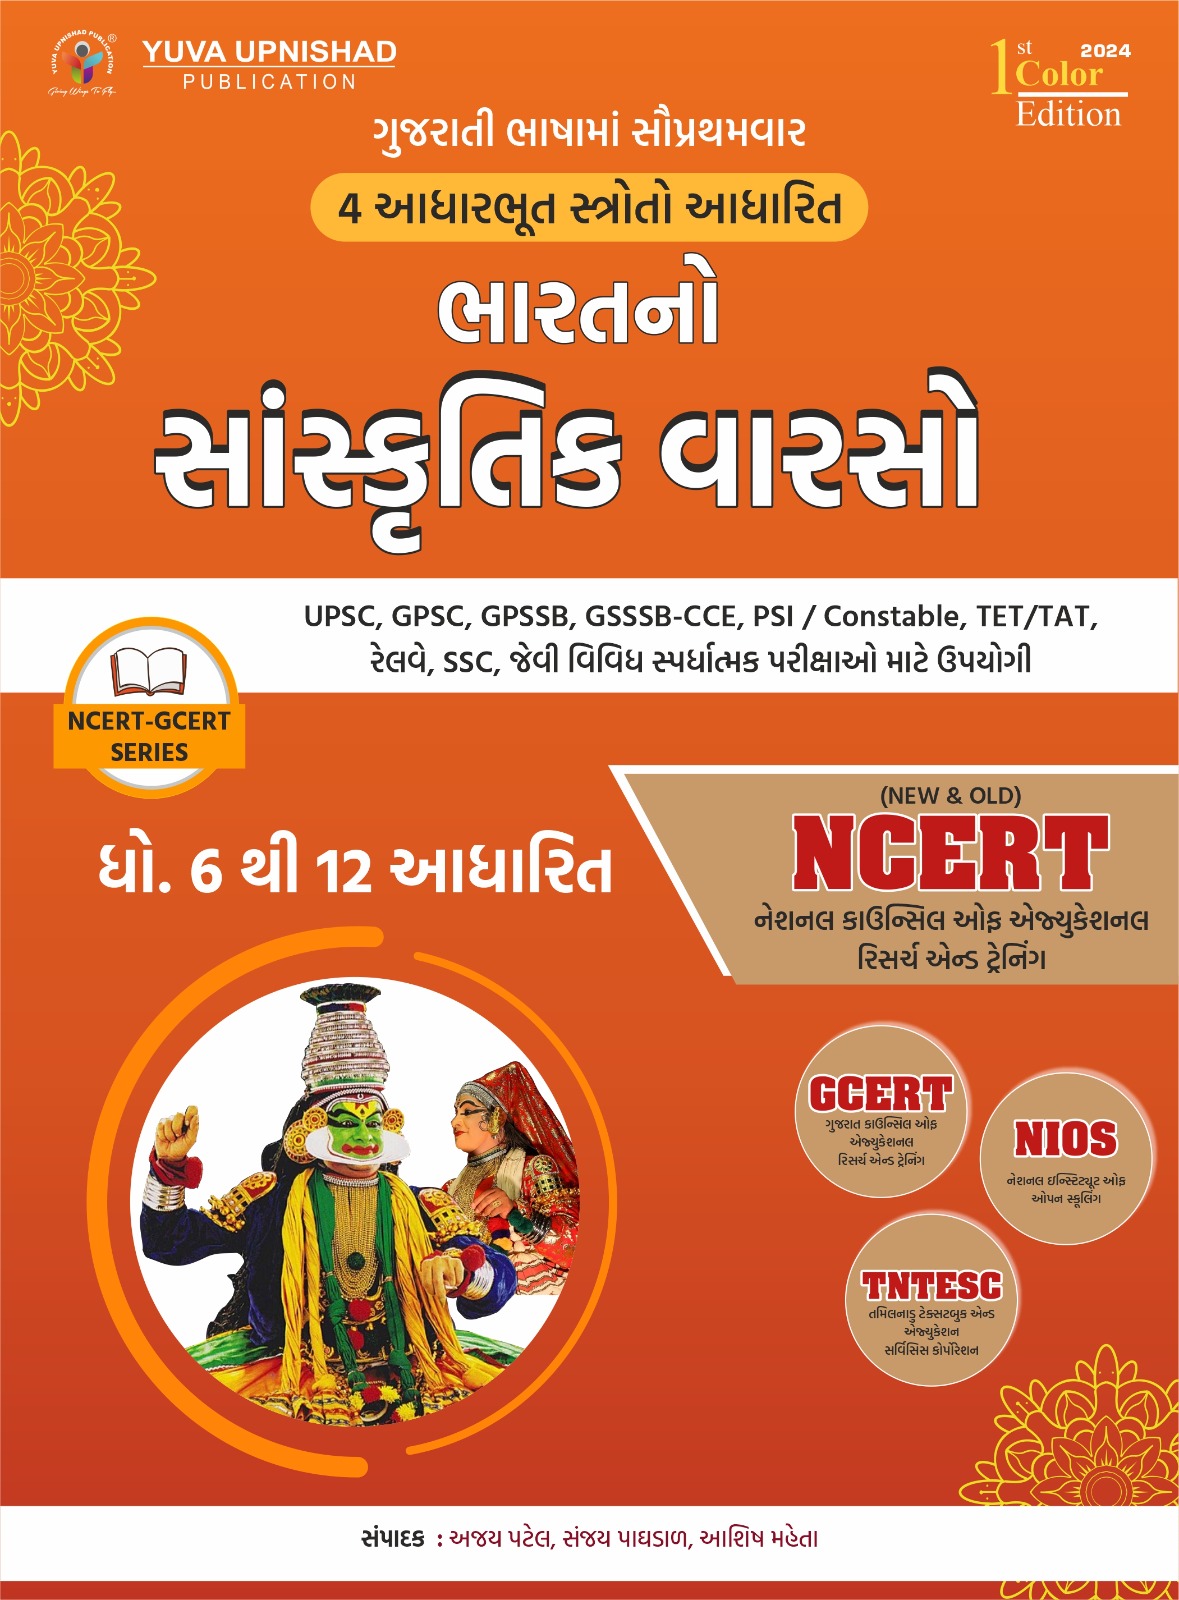 Bharatno sanskrutik varso Std 6-12 | NCERT GCERT Yuva Upnishad Indian Culture in Gujarati NCERT | Bharatno varso ncert and gcert